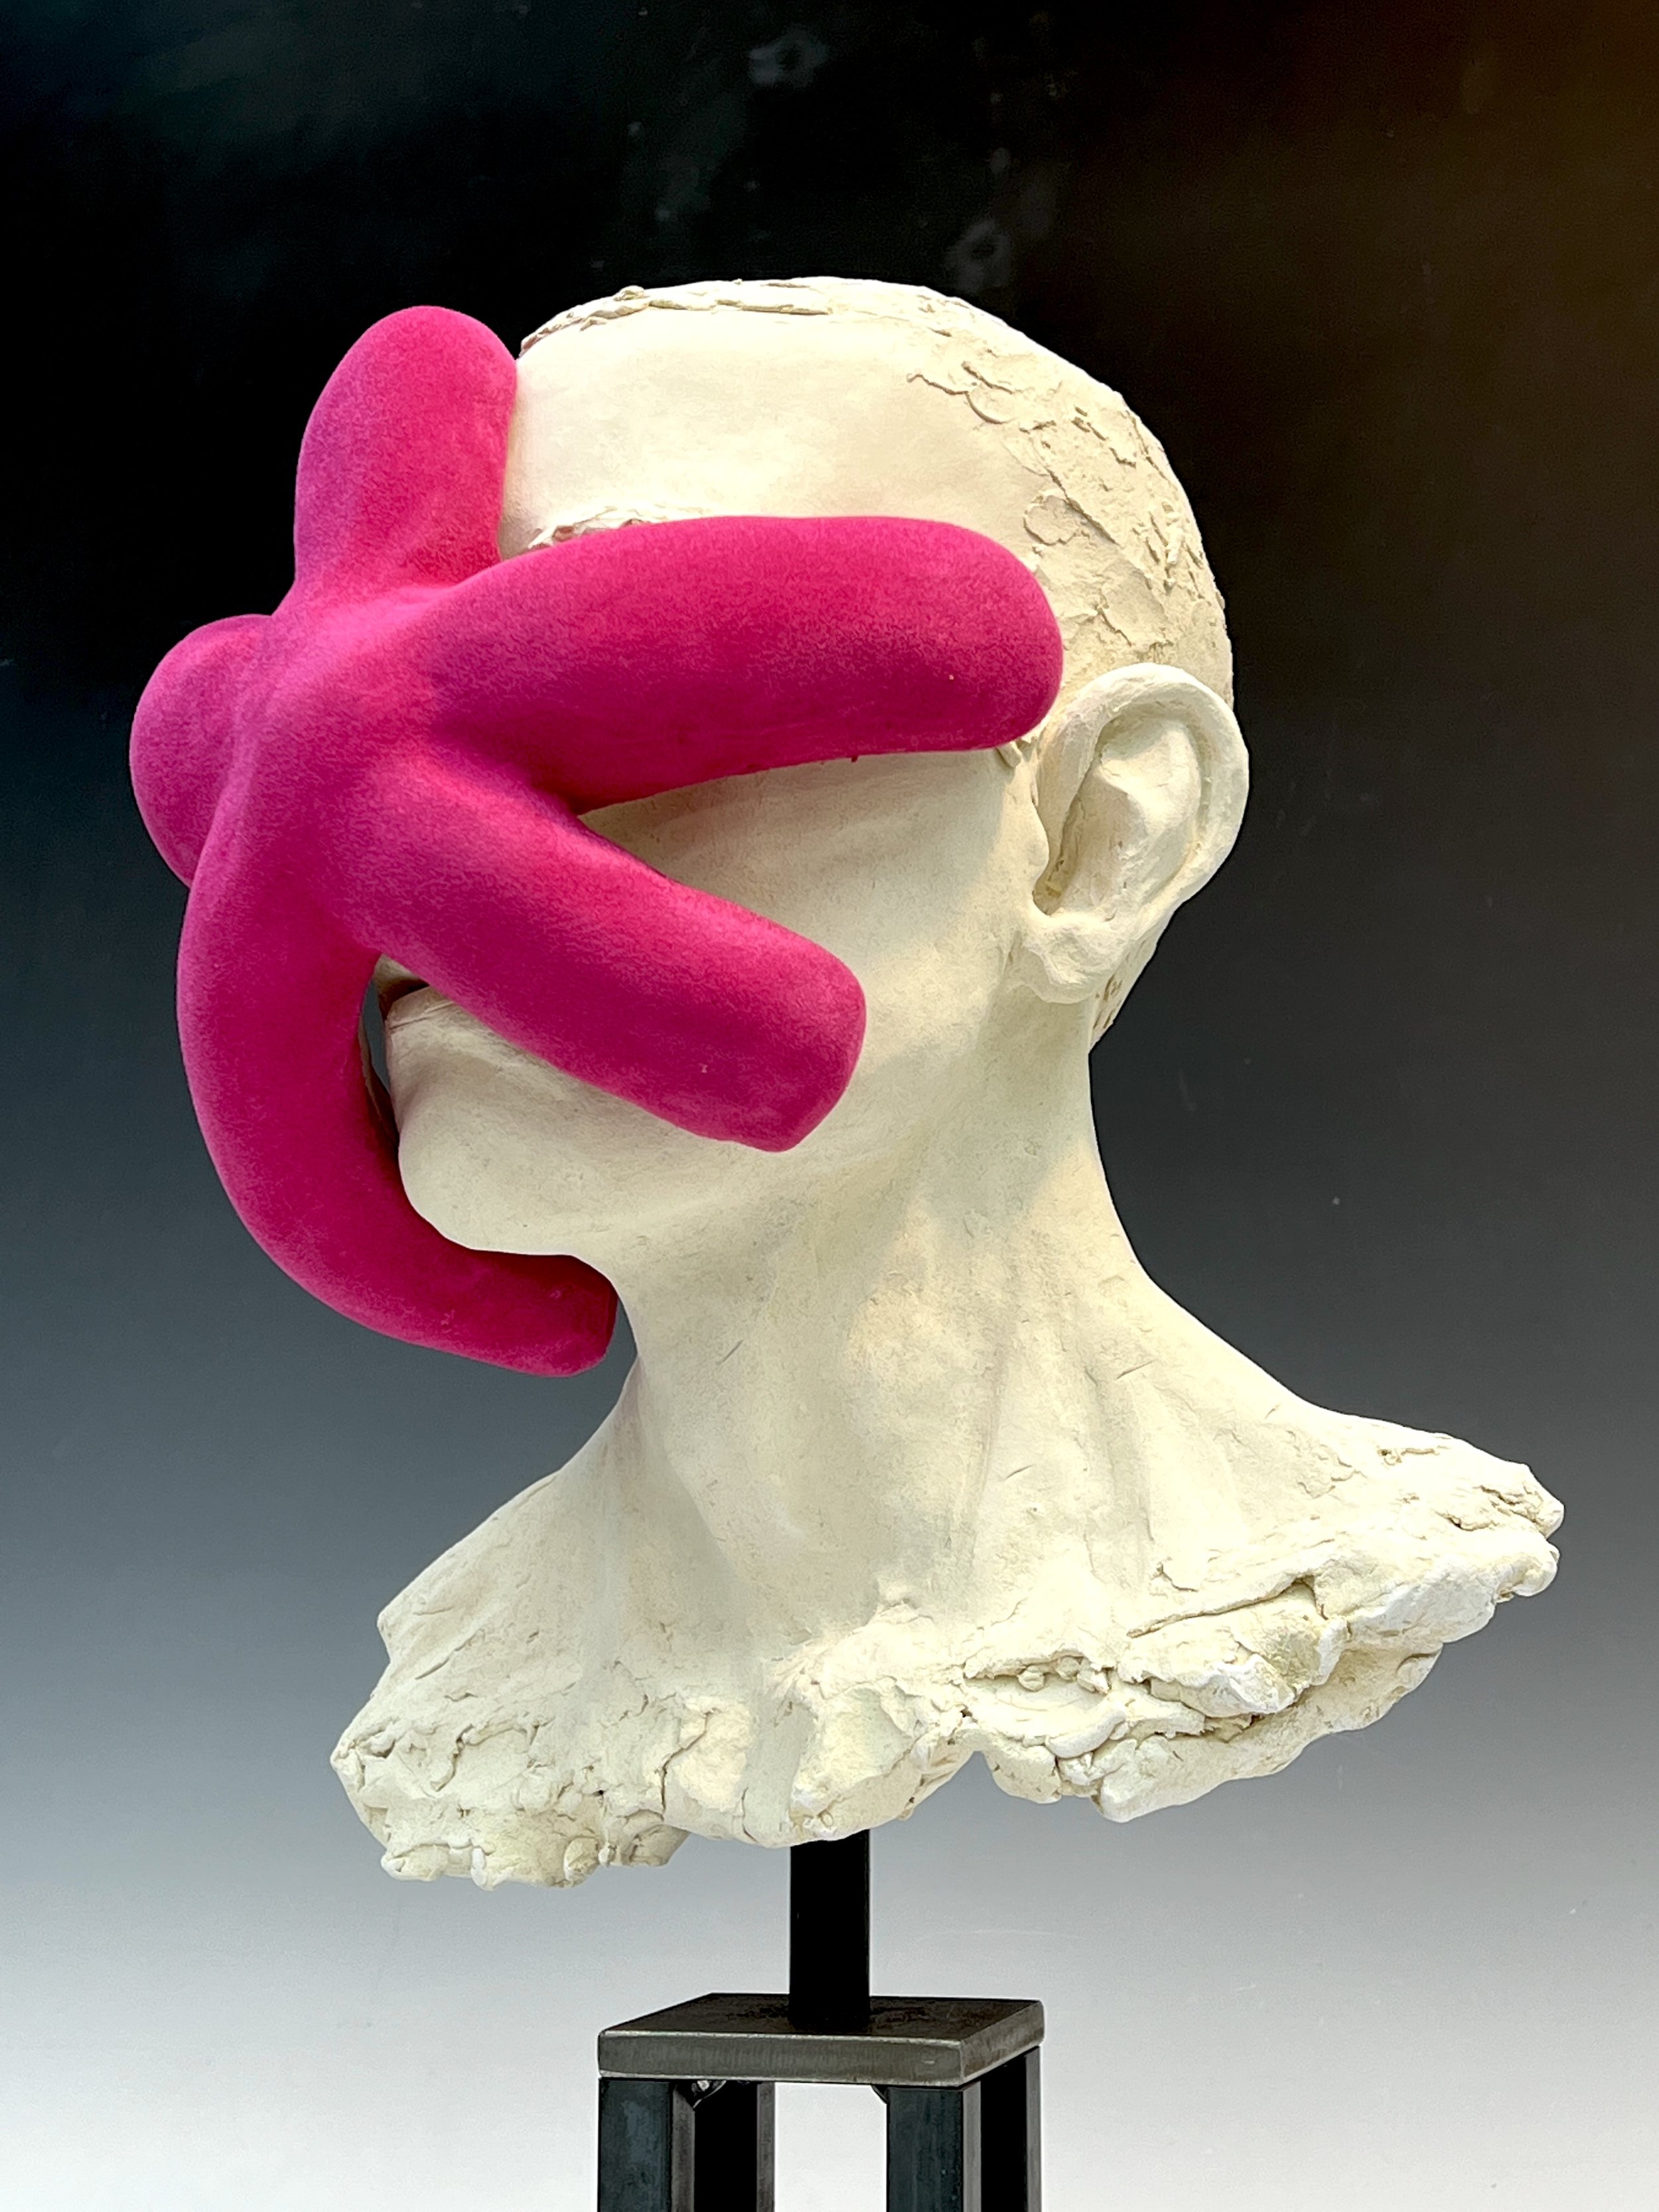 Man's Head with Pink Form-2-2022- Bob Clyatt Sculpture.jpg